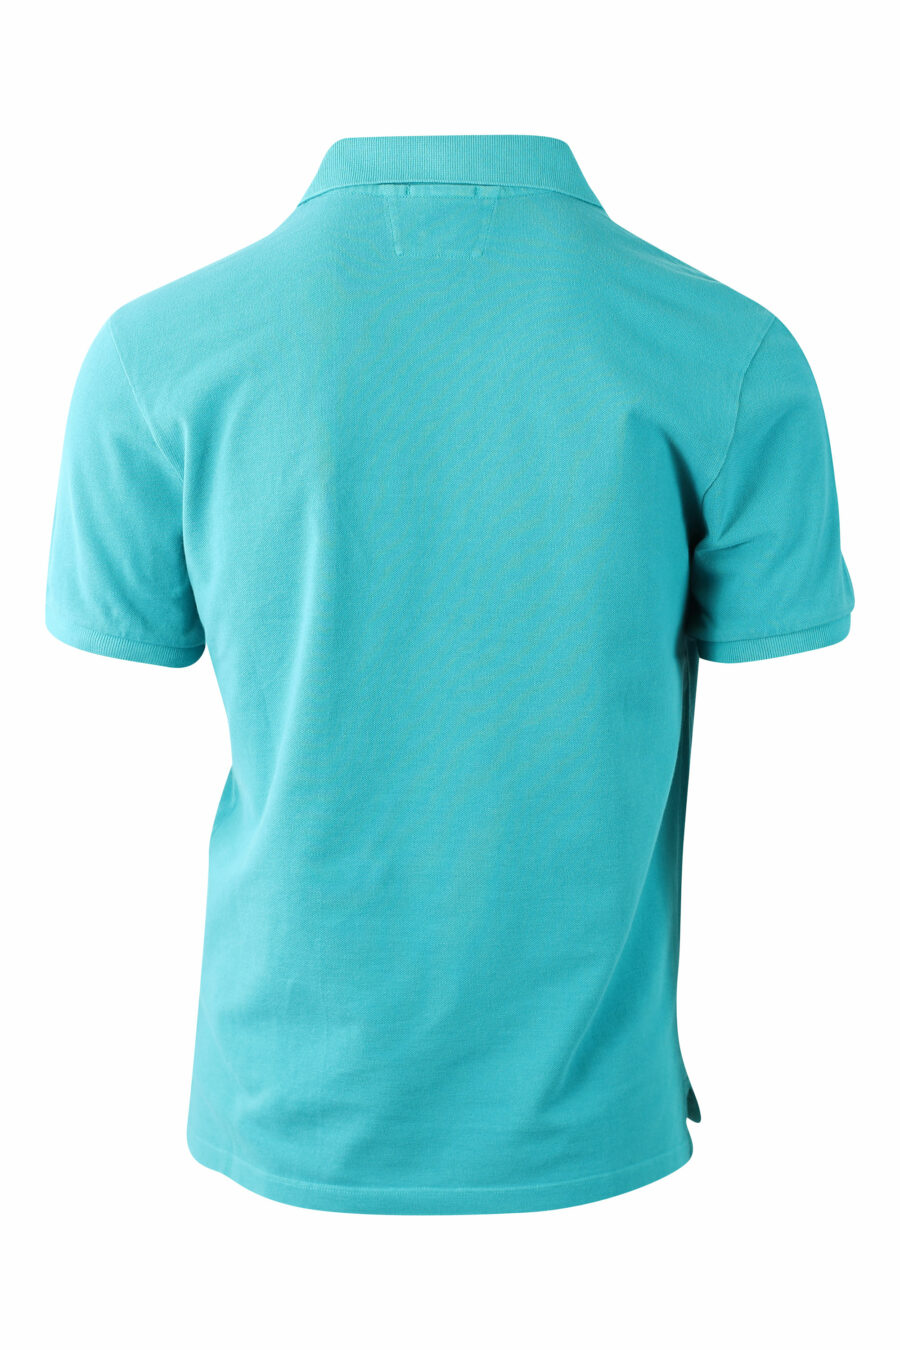 Türkisfarbenes Poloshirt mit Mini-Logoaufnäher - IMG 0057 1